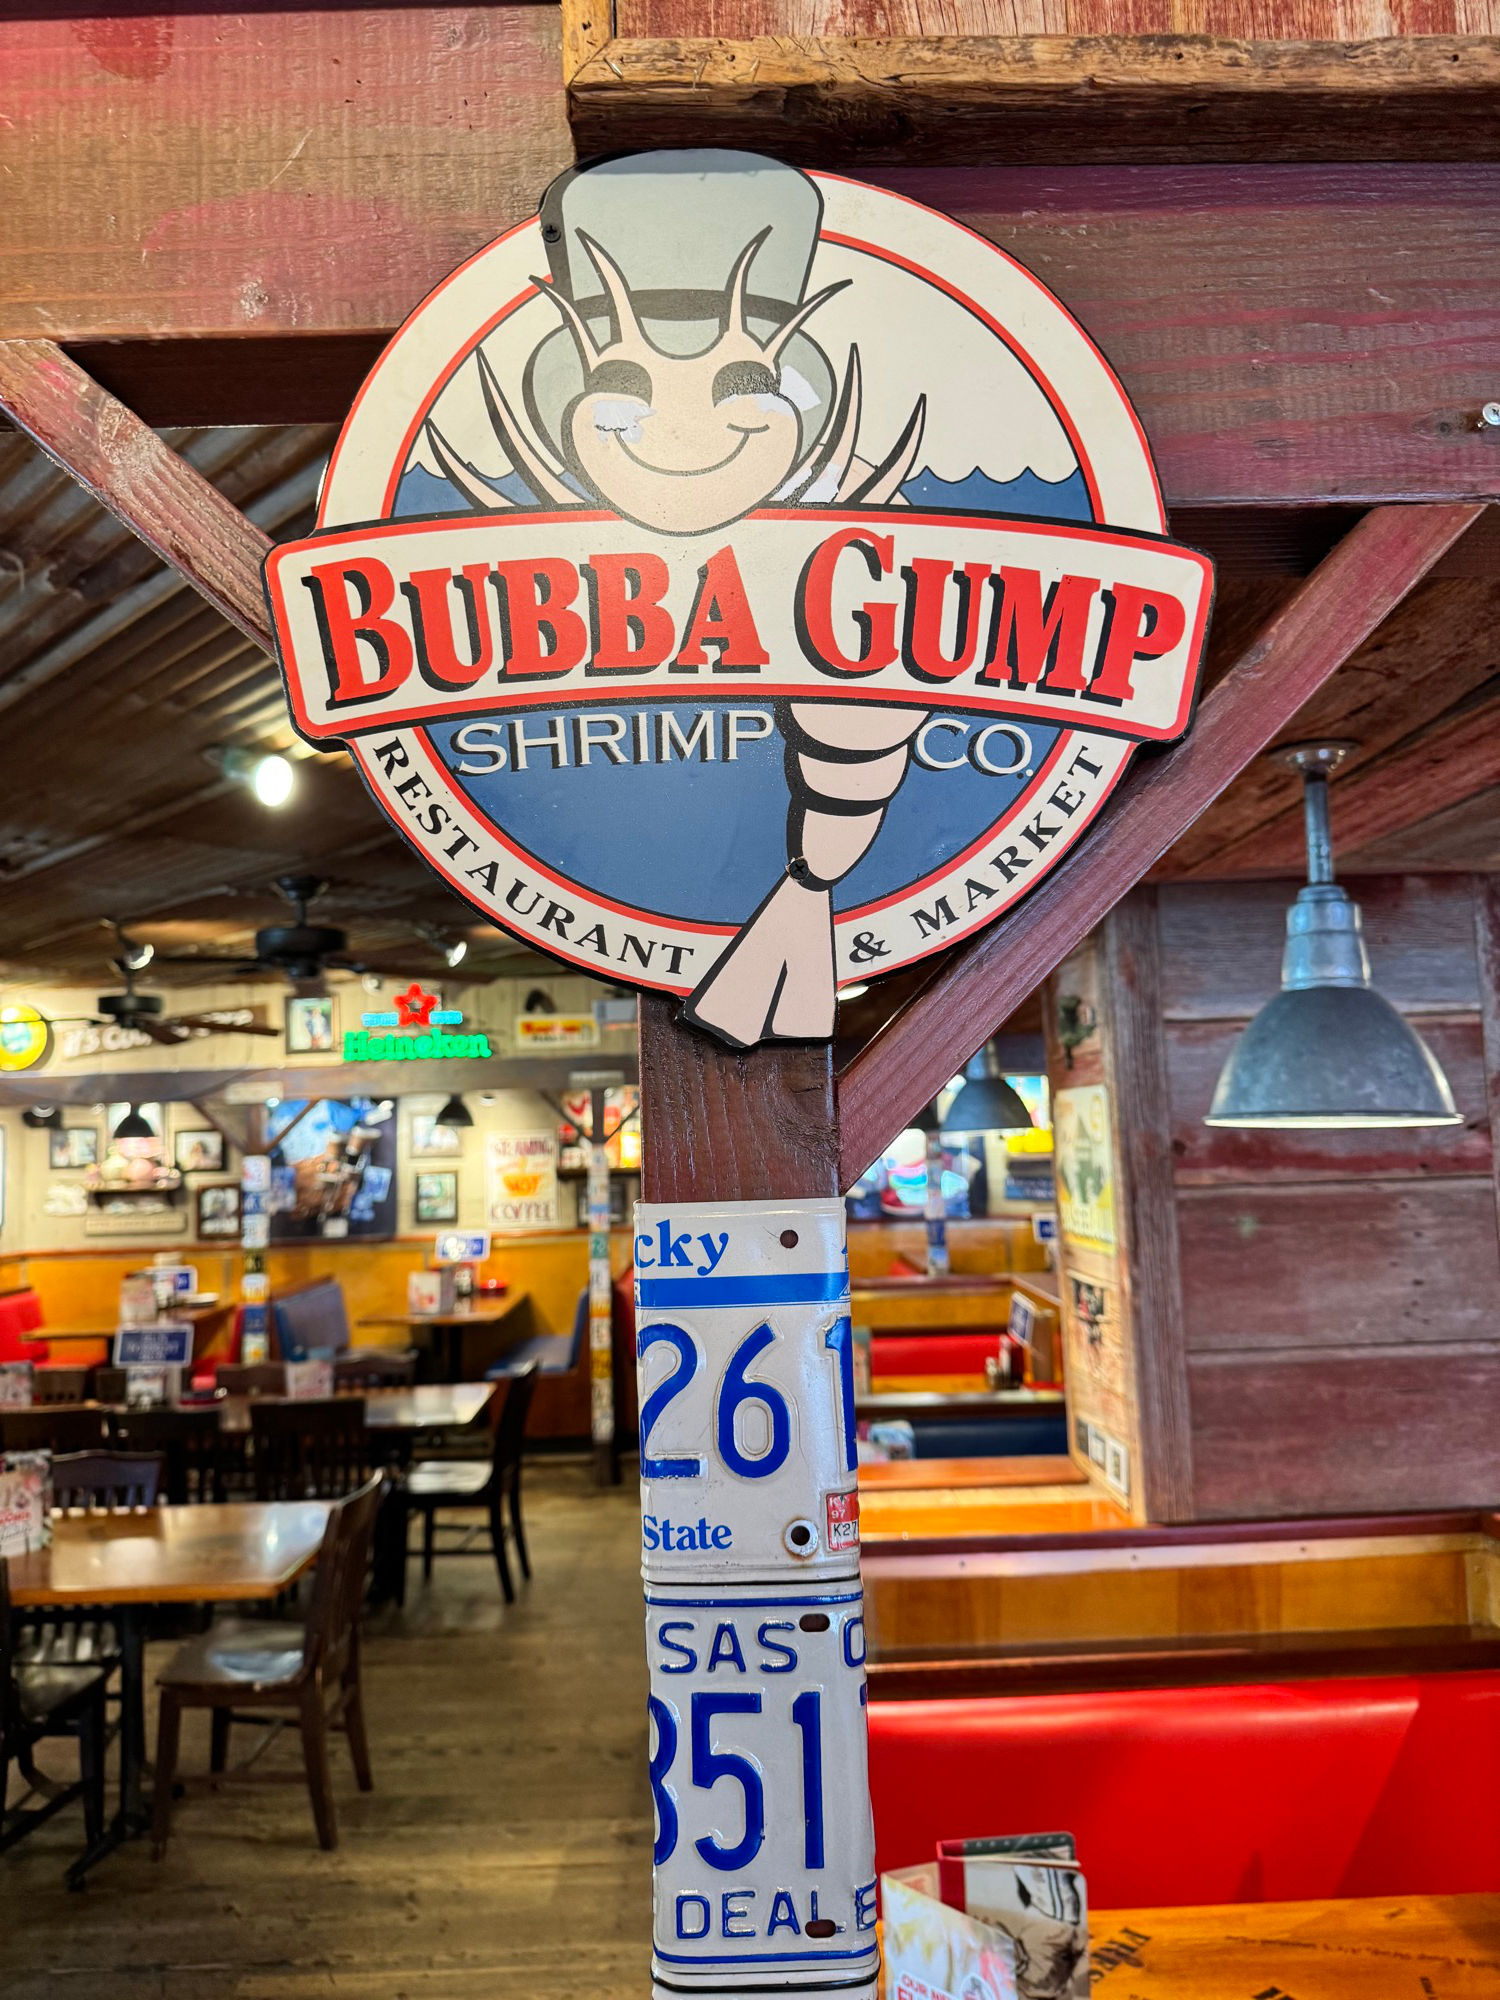 Bubba Gump Shrimp Co Restaurant & Market